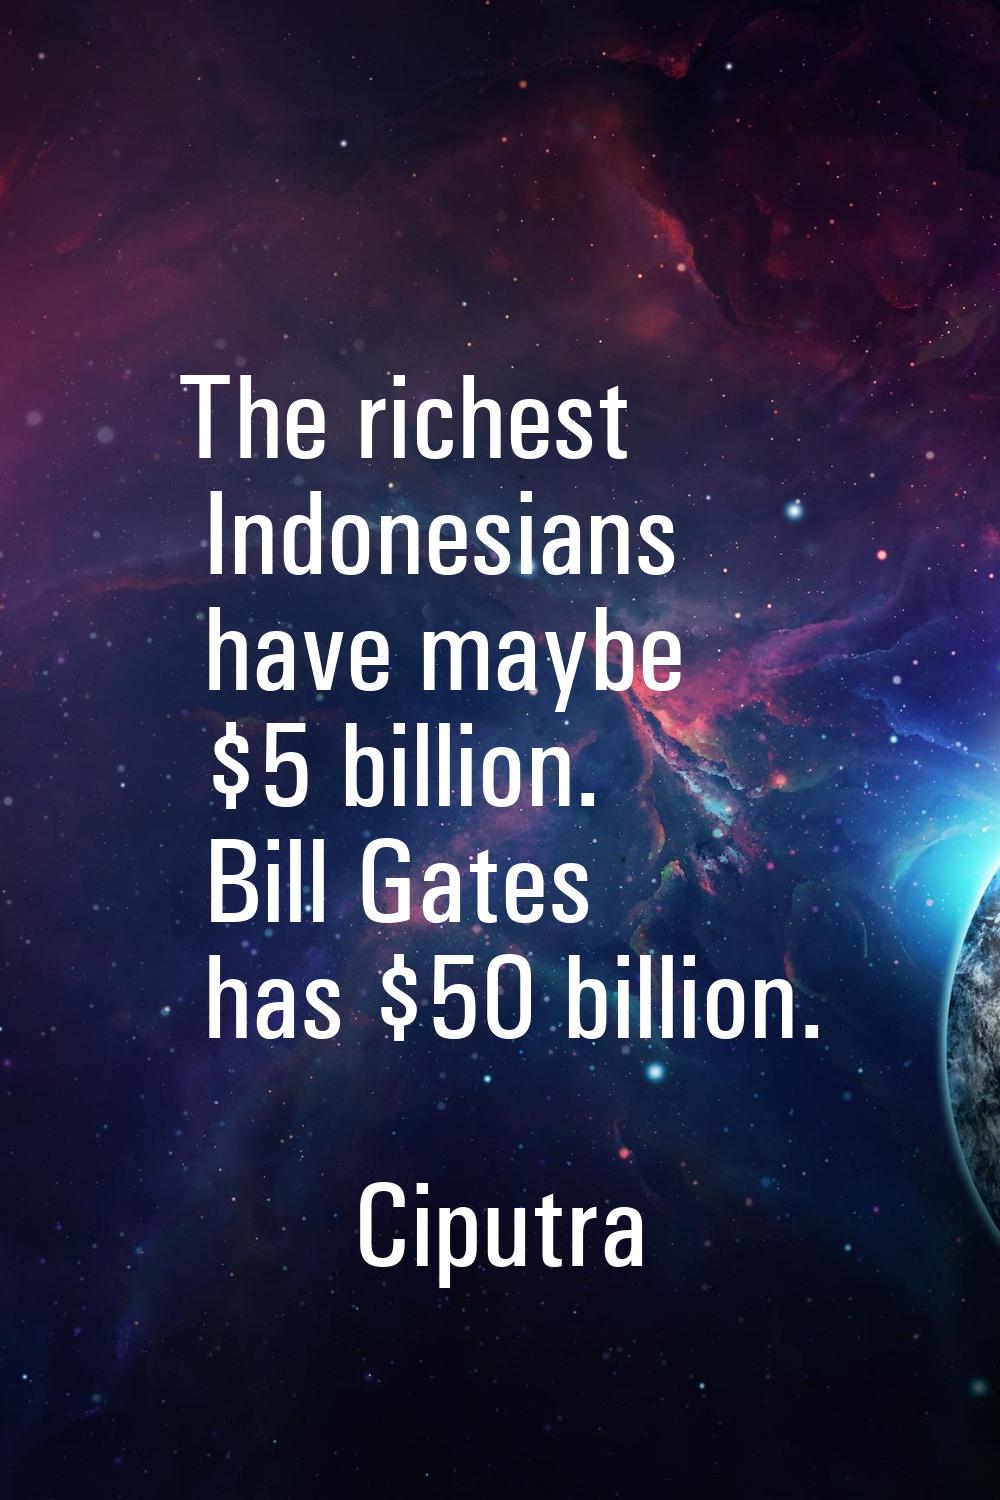 The richest Indonesians have maybe $5 billion. Bill Gates has $50 billion.